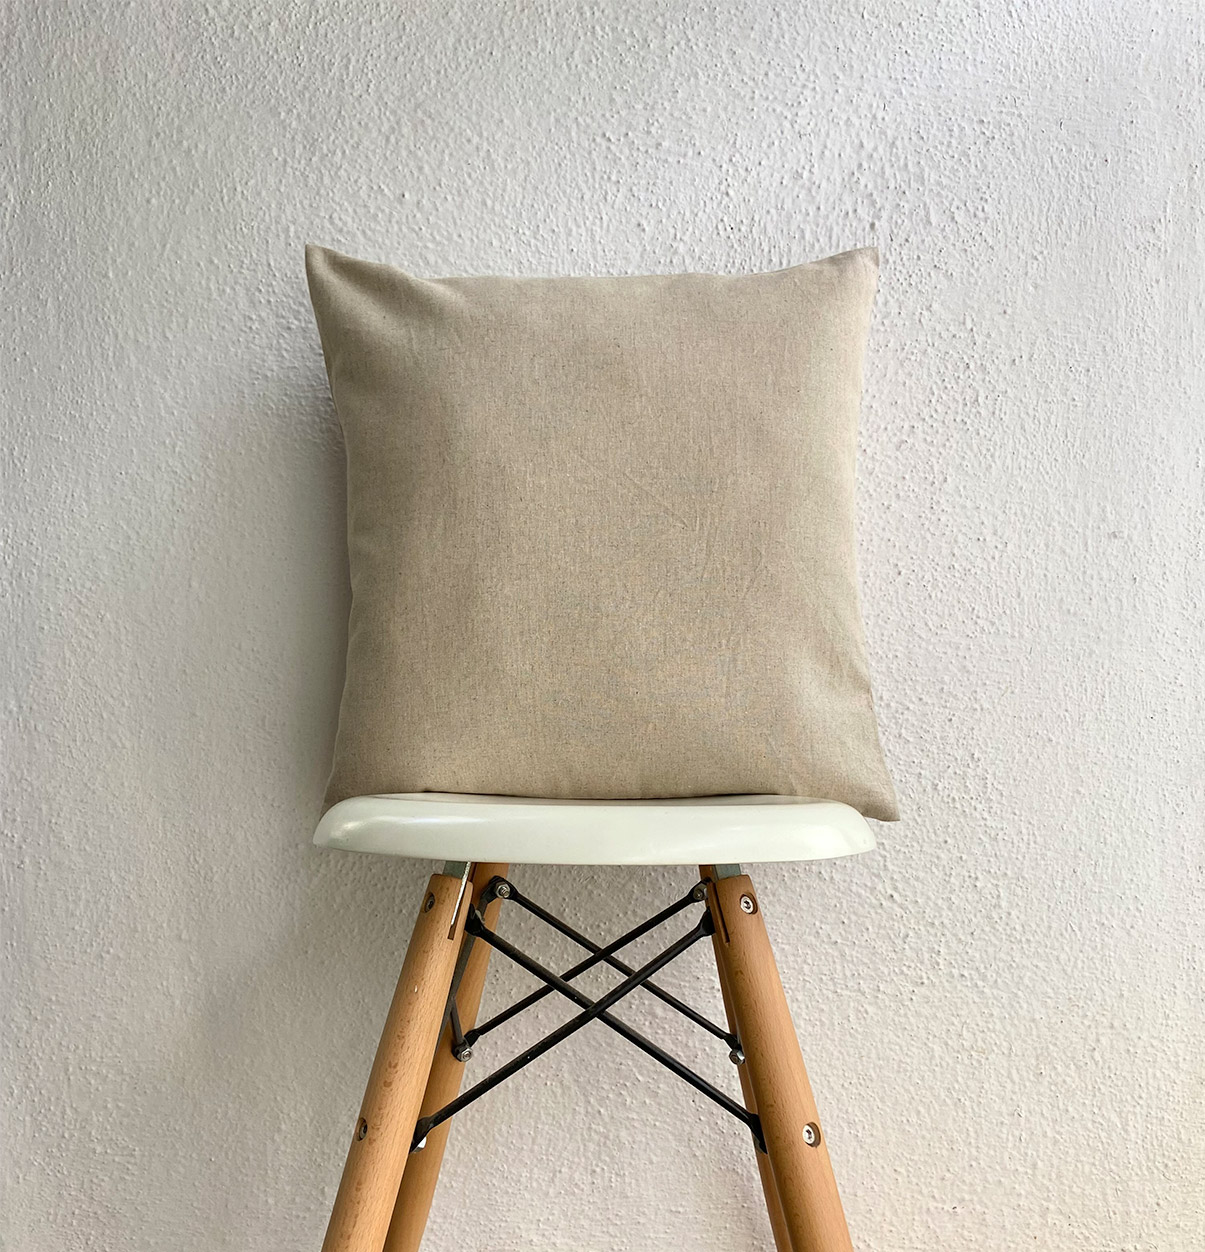 Textured Linen Cushion cover Flax Beige 16″x16″